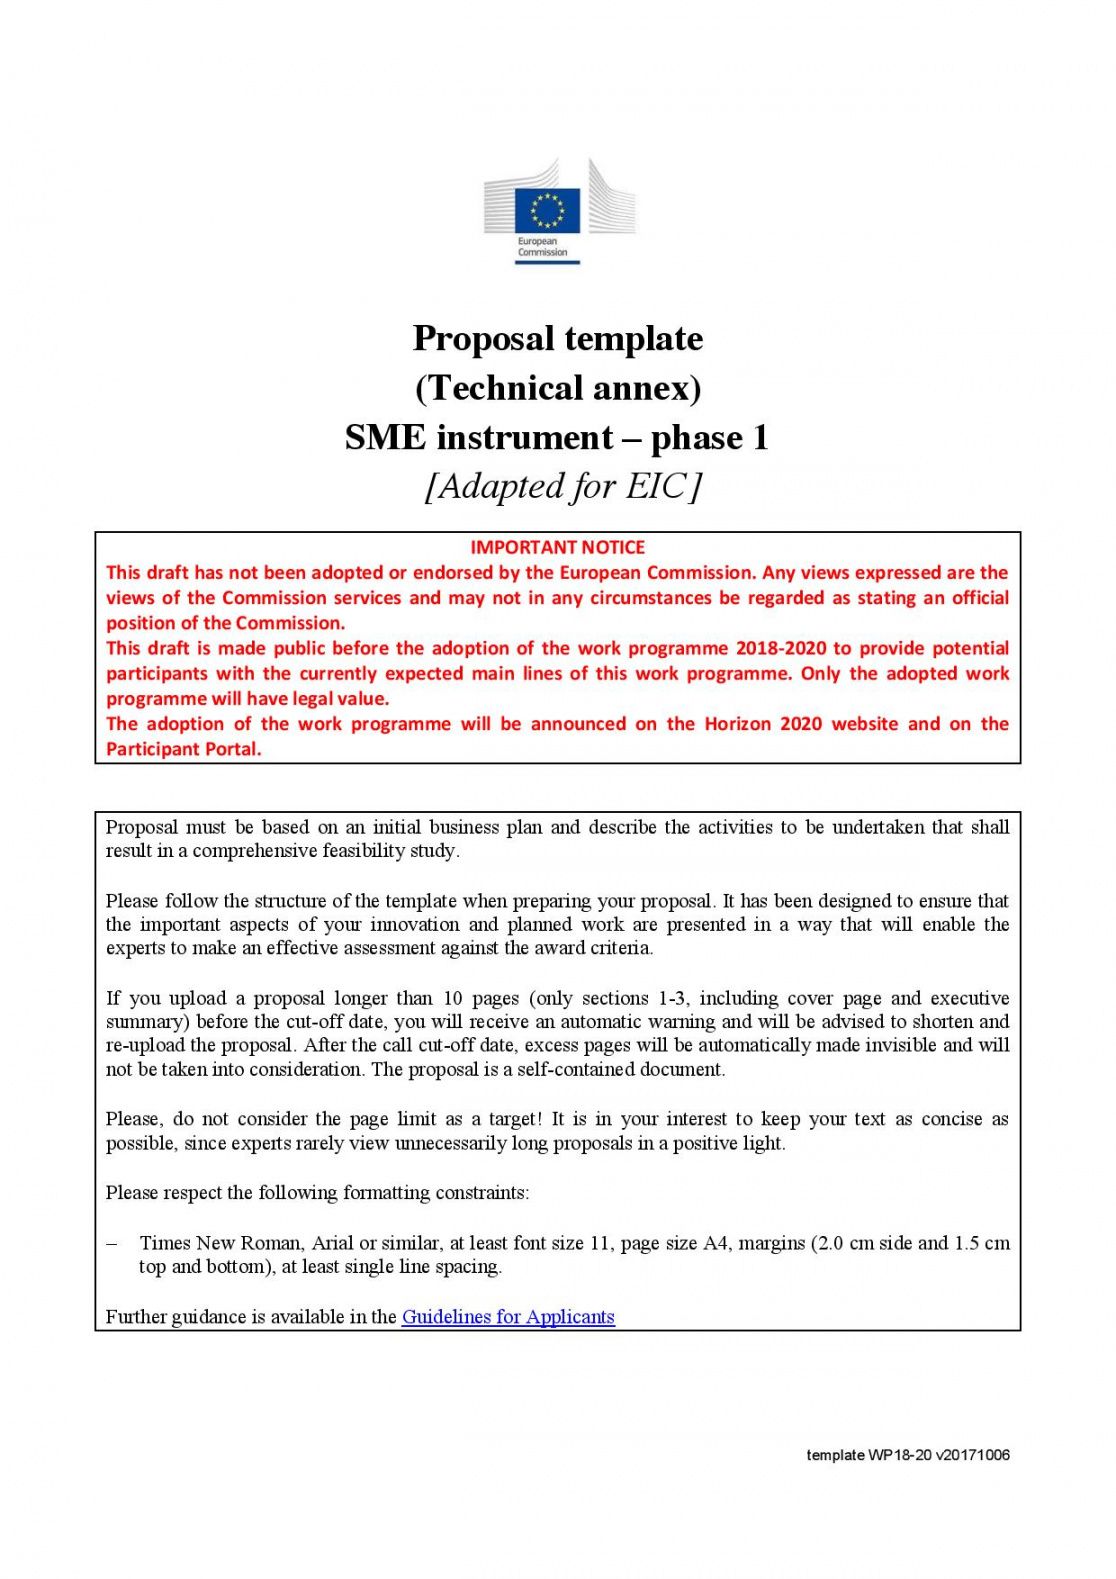 sample eic pilot sme instrument phase 1  proposal template  kol pilot project proposal template excel